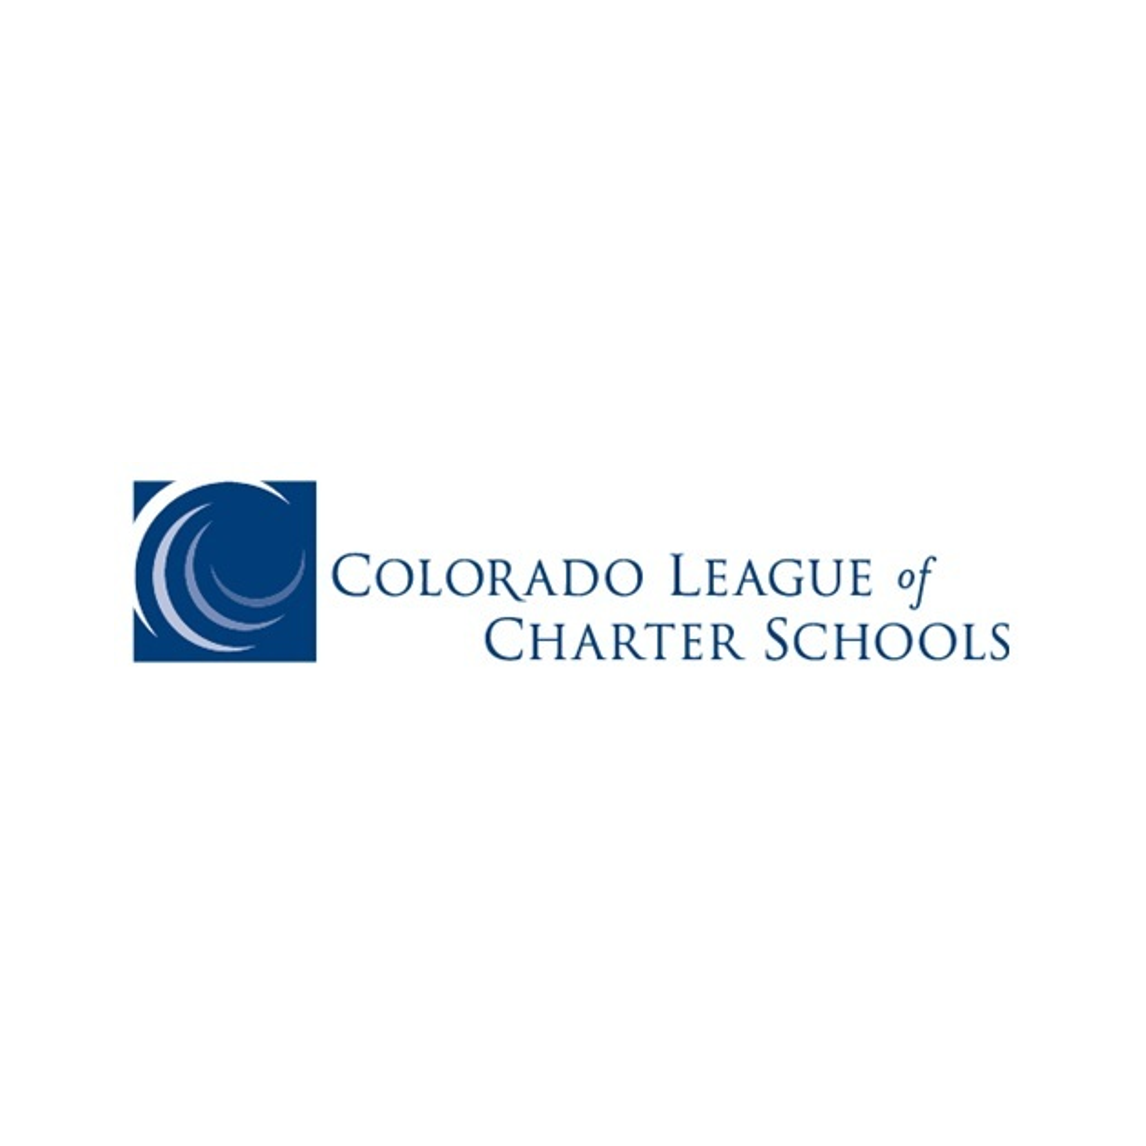 Colorado Charter Schools Annual Conference